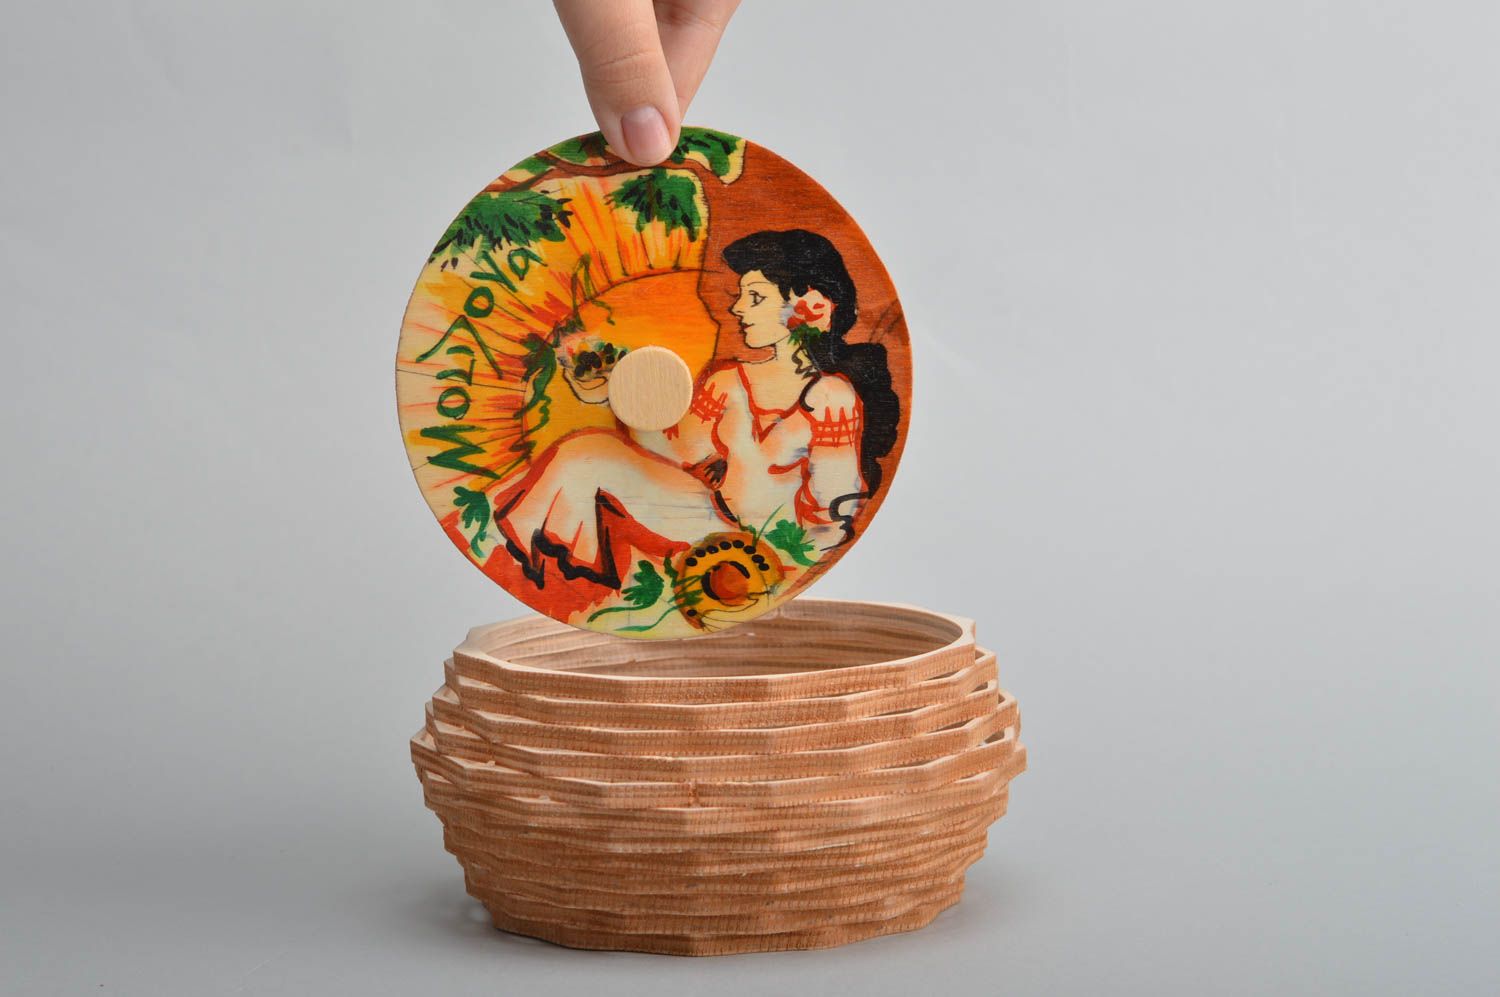 Runde Schatulle aus Holz bemalt ajour auffallend schön modisch handmade stilvoll foto 3